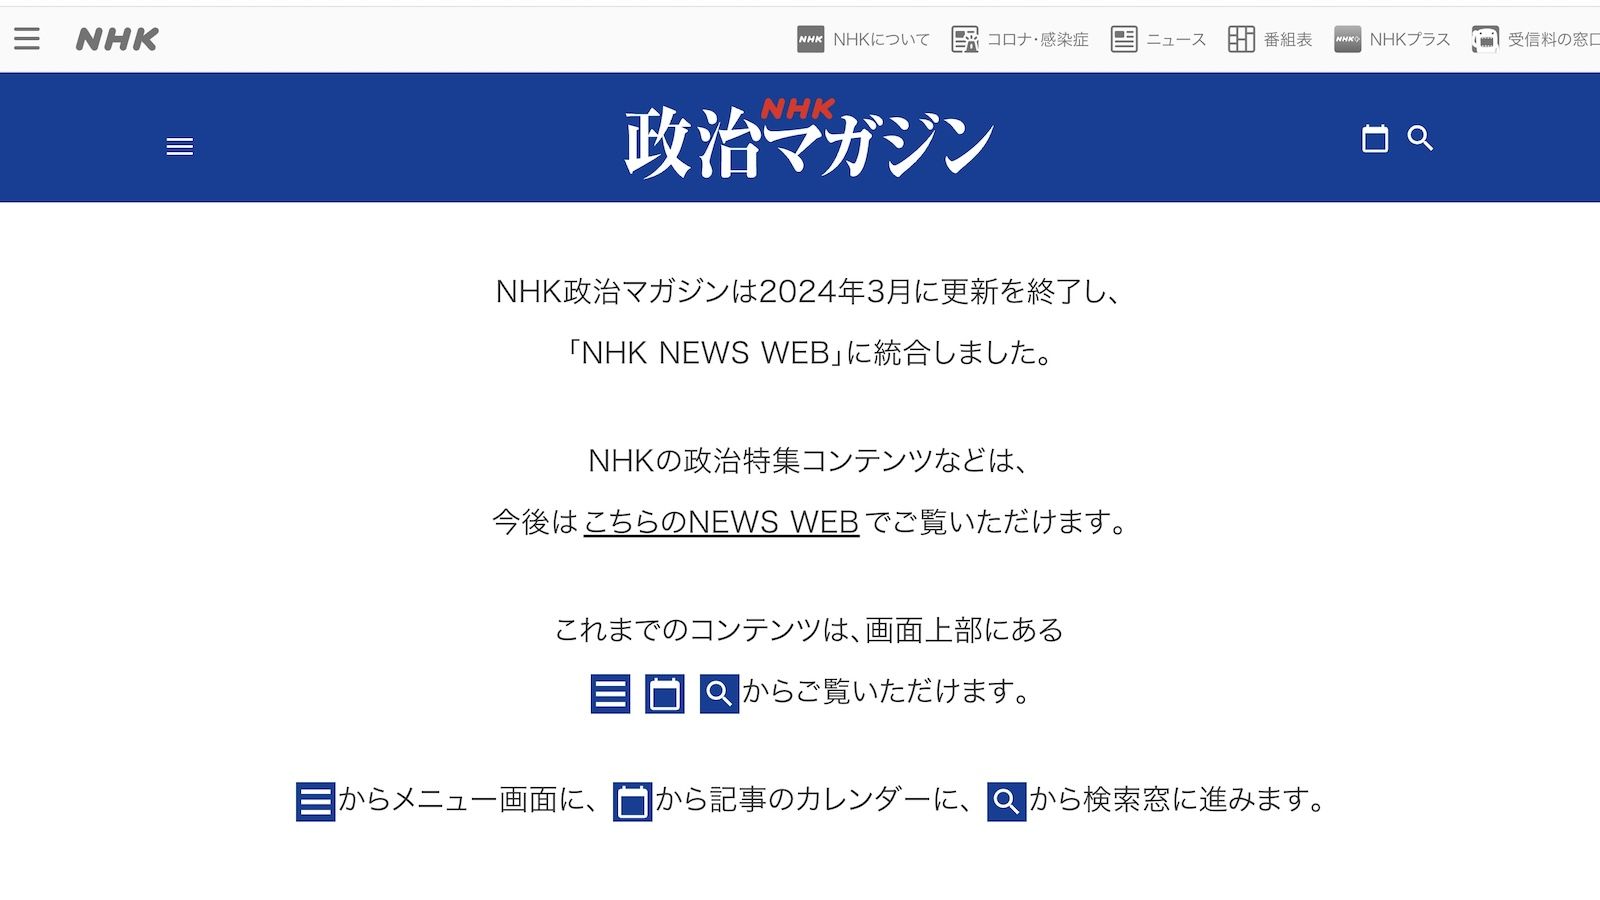 NHK｢1000億円削減｣とコンテンツ拡充の大矛盾 ｢6つのニュースサイト､突然閉鎖｣の背景とは